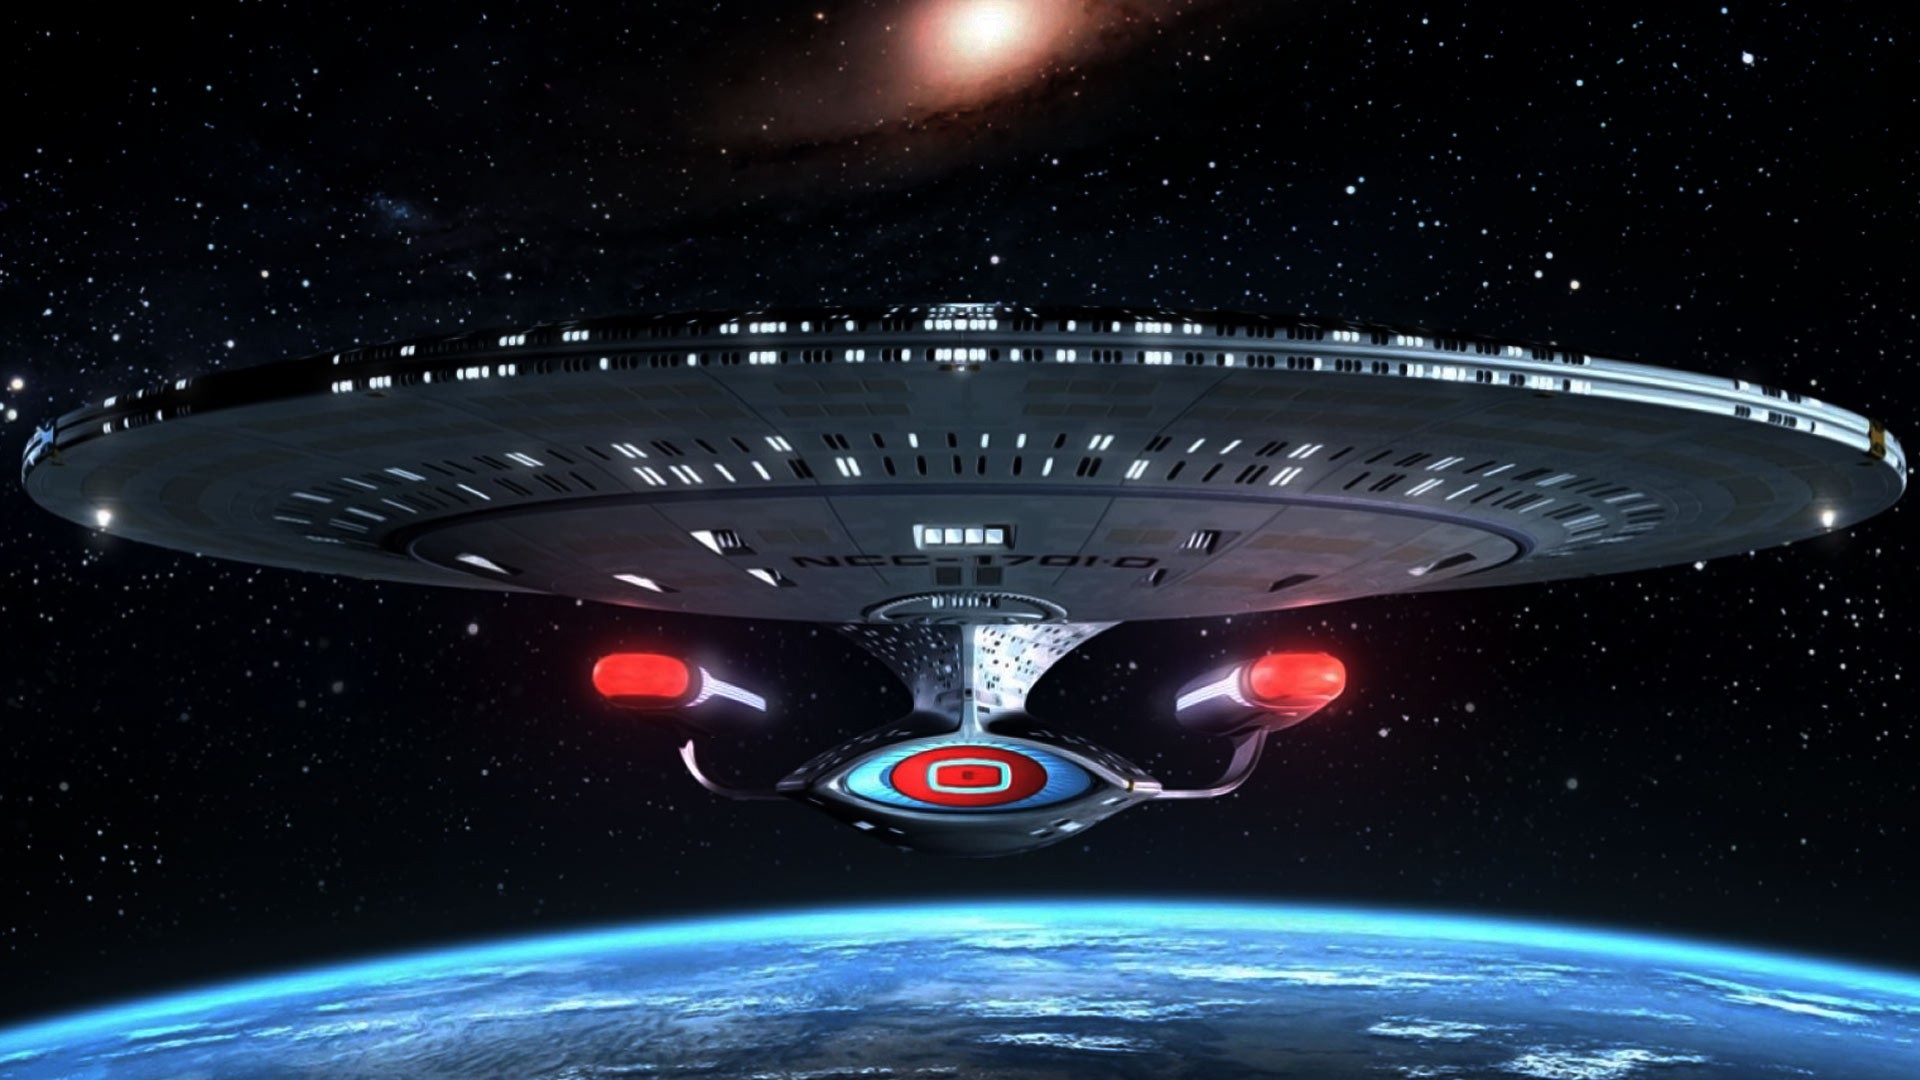 Science Fiction Spaceship NCC 1701 Enterprise D Star Trek The Next Generation Star Trek Ships Star T 1920x1080